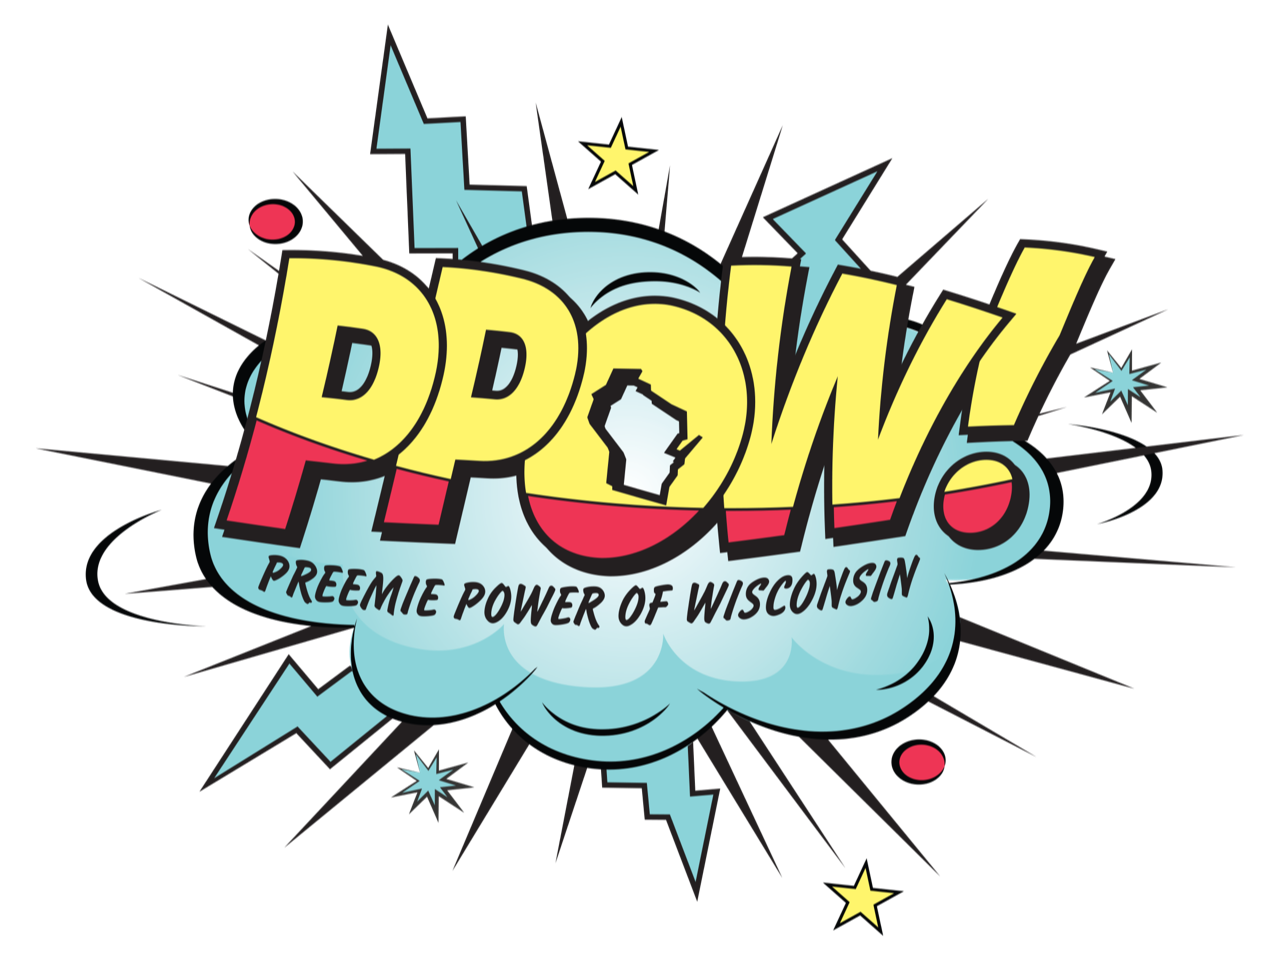 Preemie Power of Wisconsin